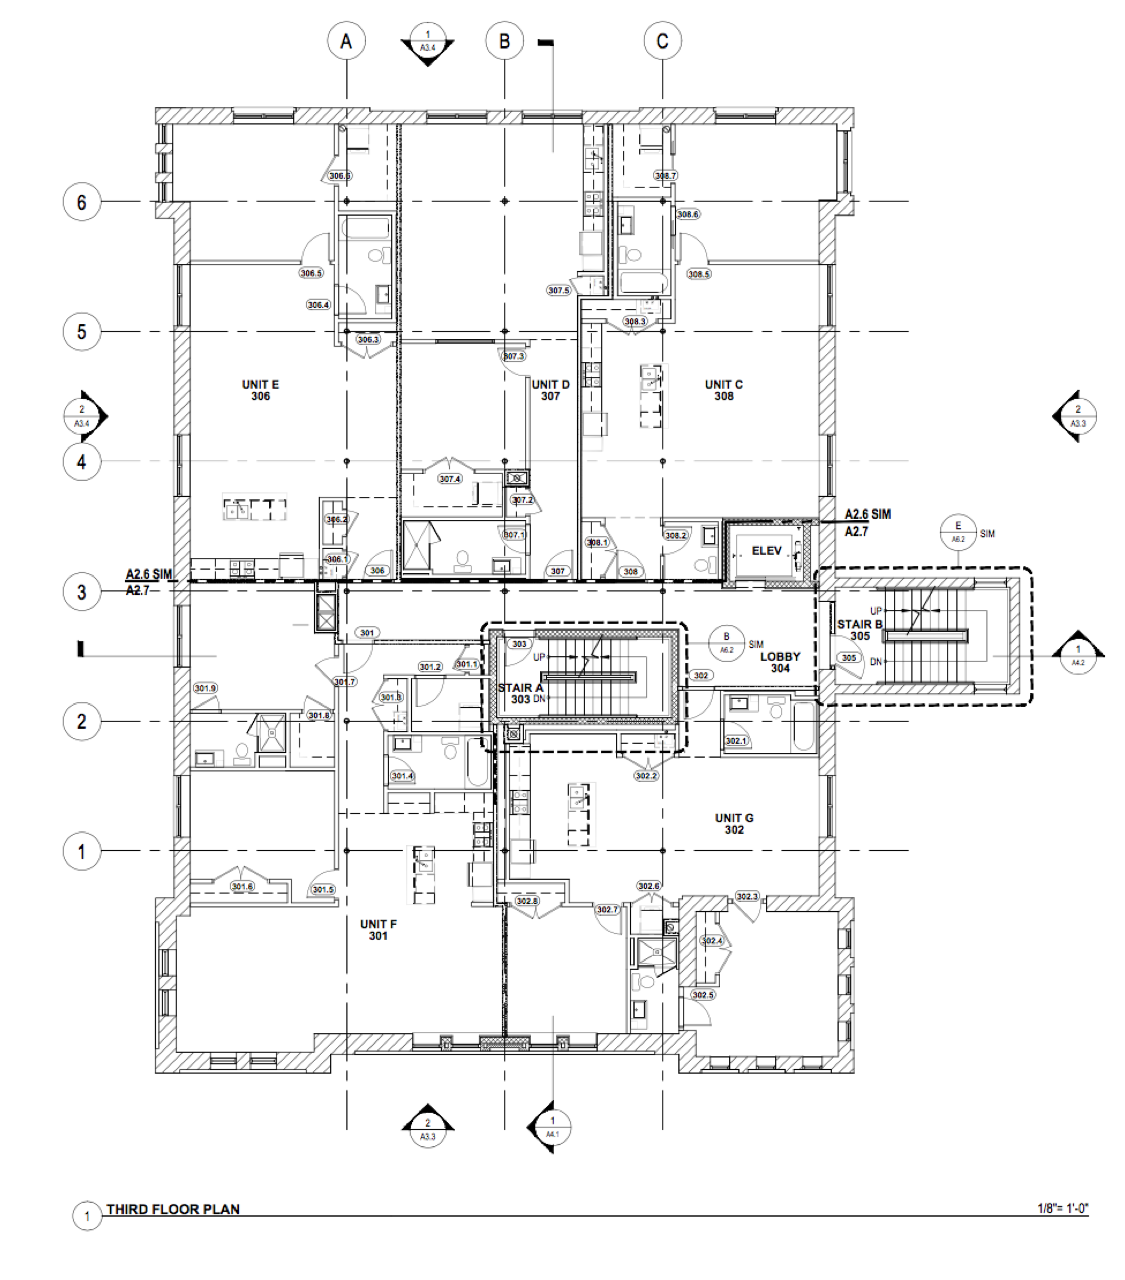  Typical floor plan Provided for illustrative purposes only courtesy of Antonio Manaigo 